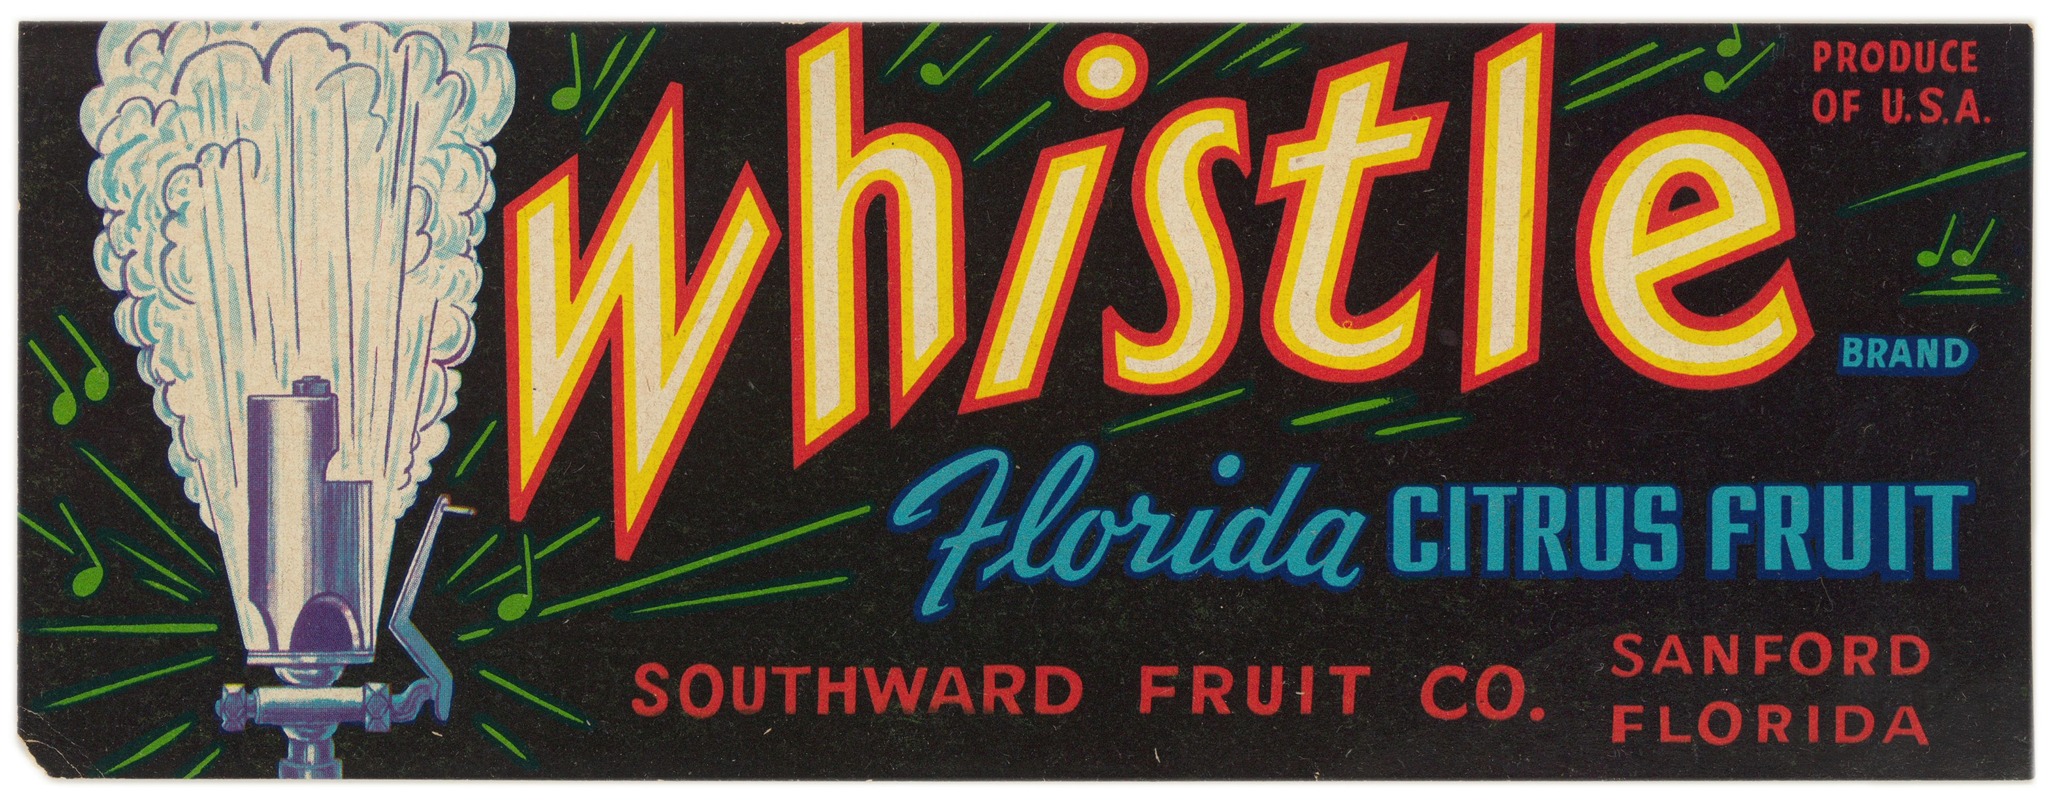 Anonymous - Whistle Brand Florida Citrus Fruit Label